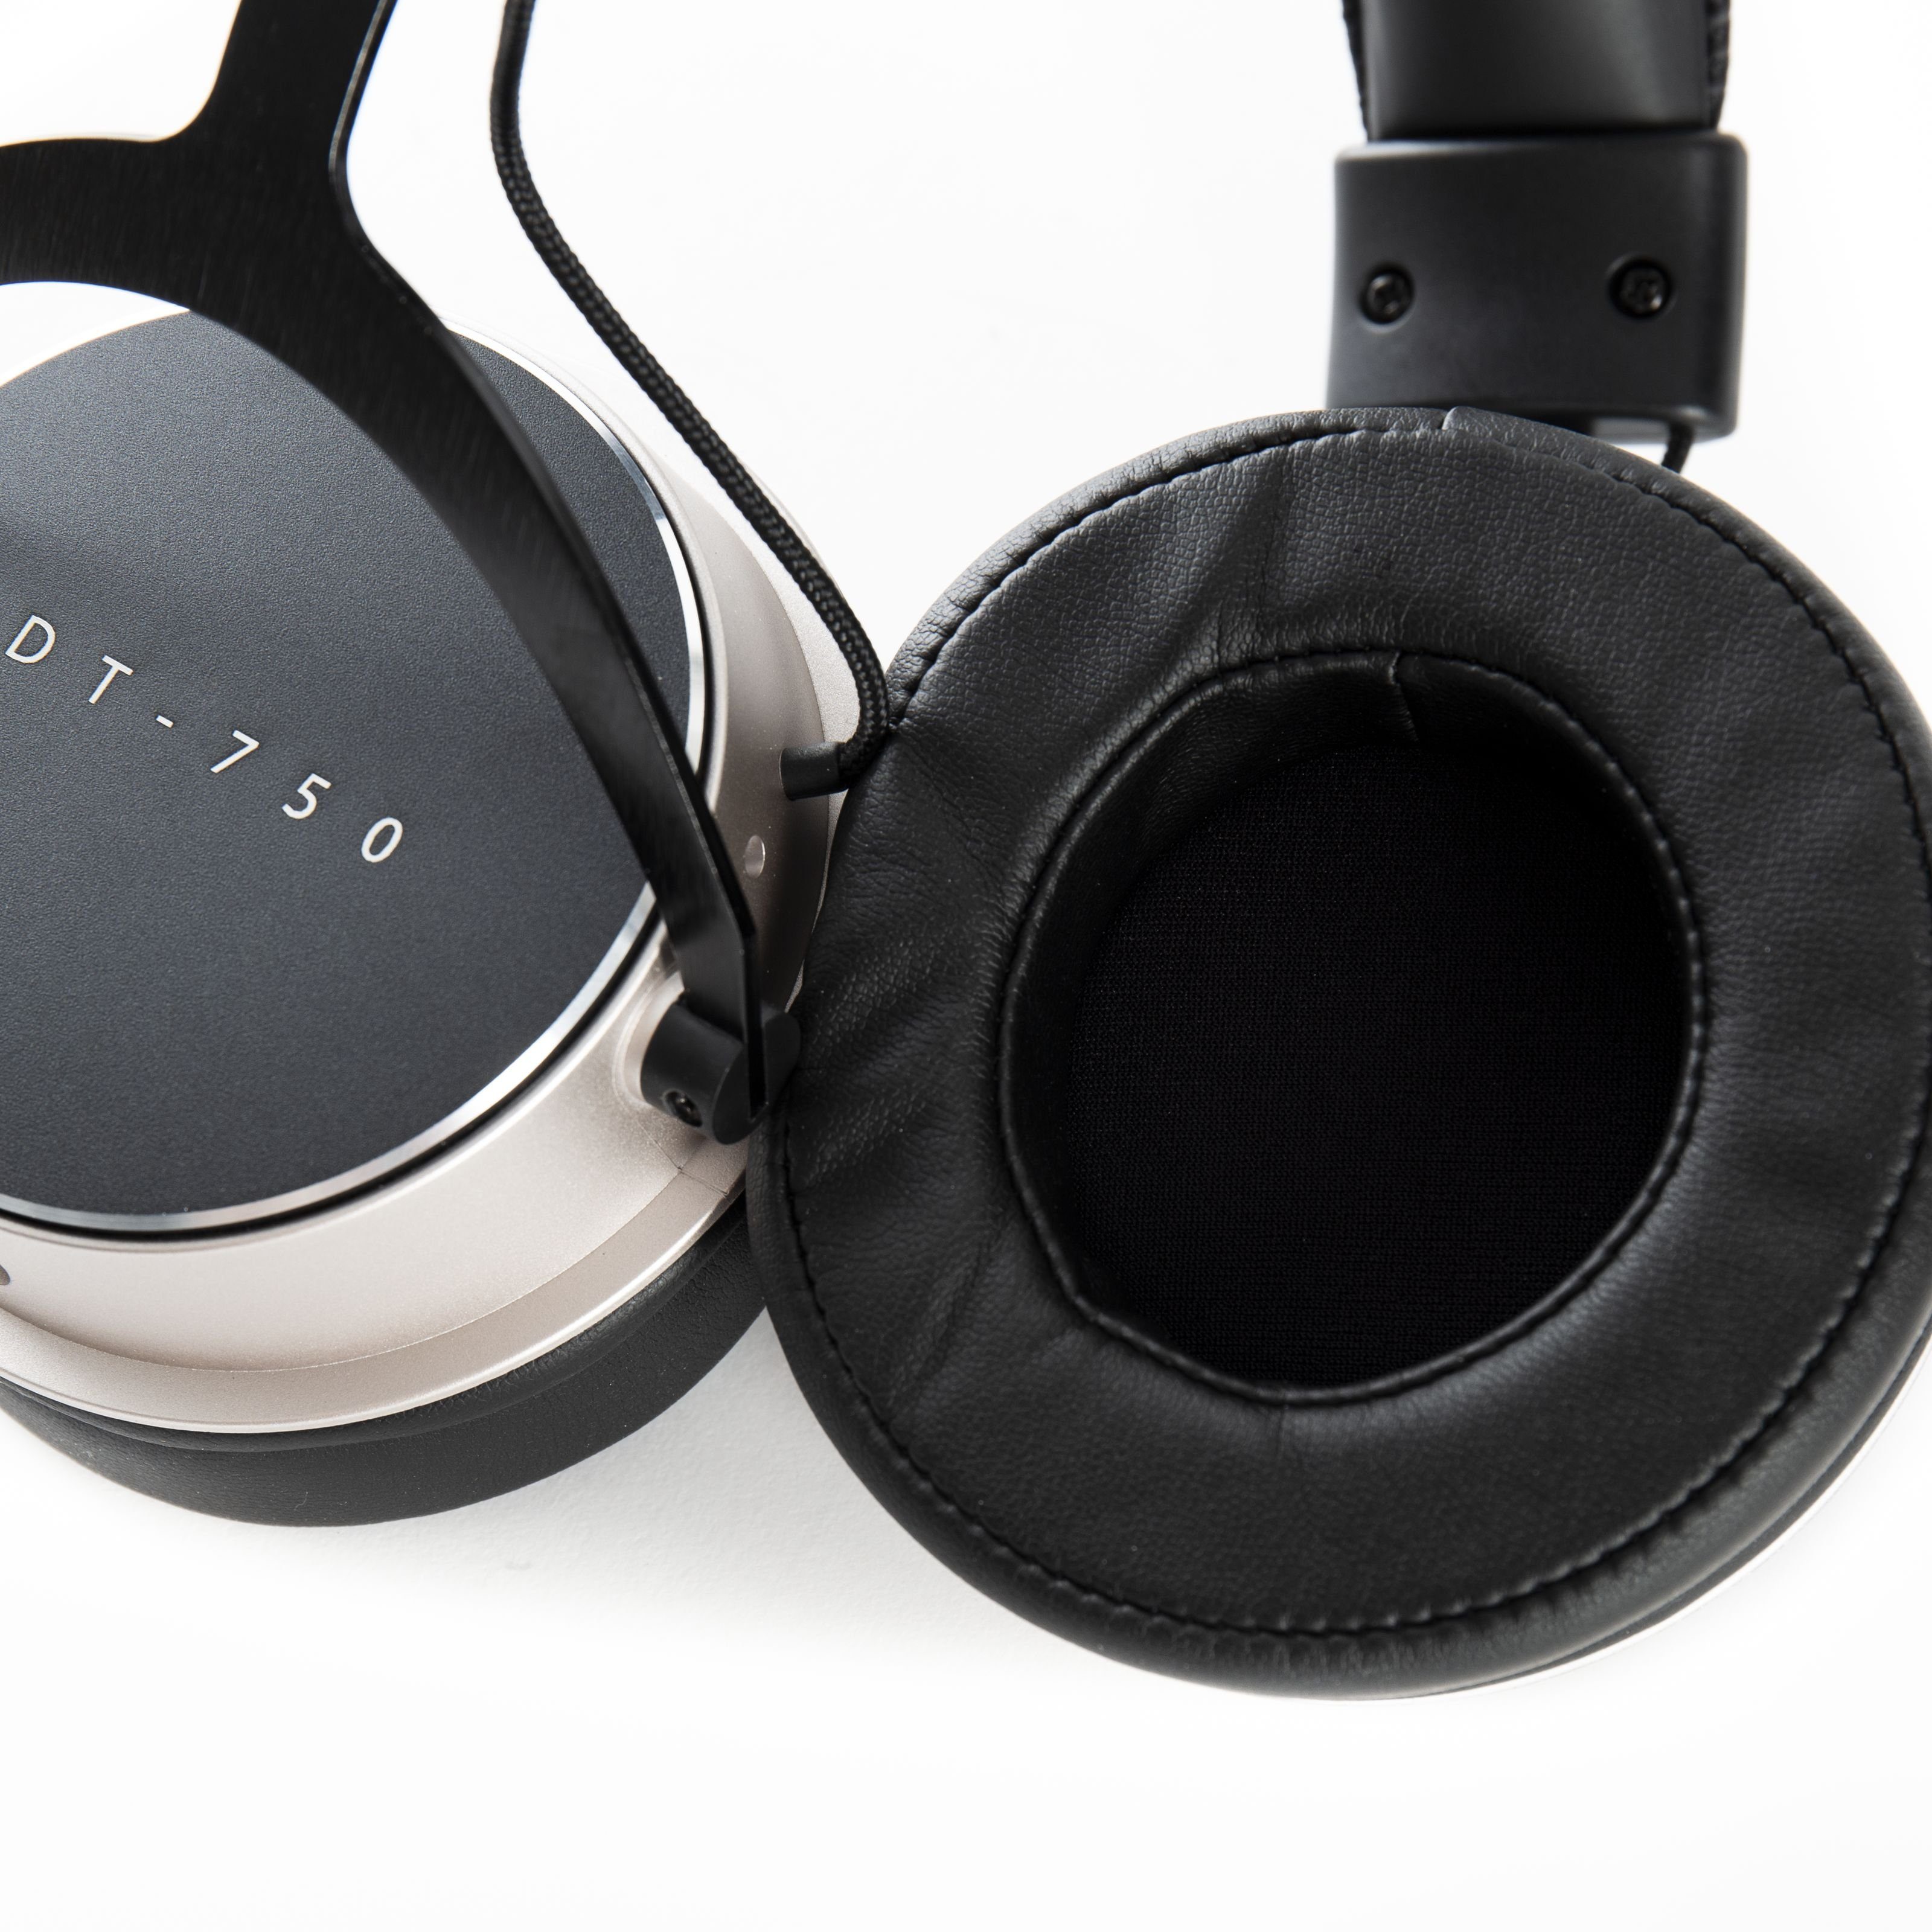 Audio Kabel) Kopfhörer (DT-750 geschlossen Studio Fame mit Kopfhörer Kopfhörer, abnehmbaren